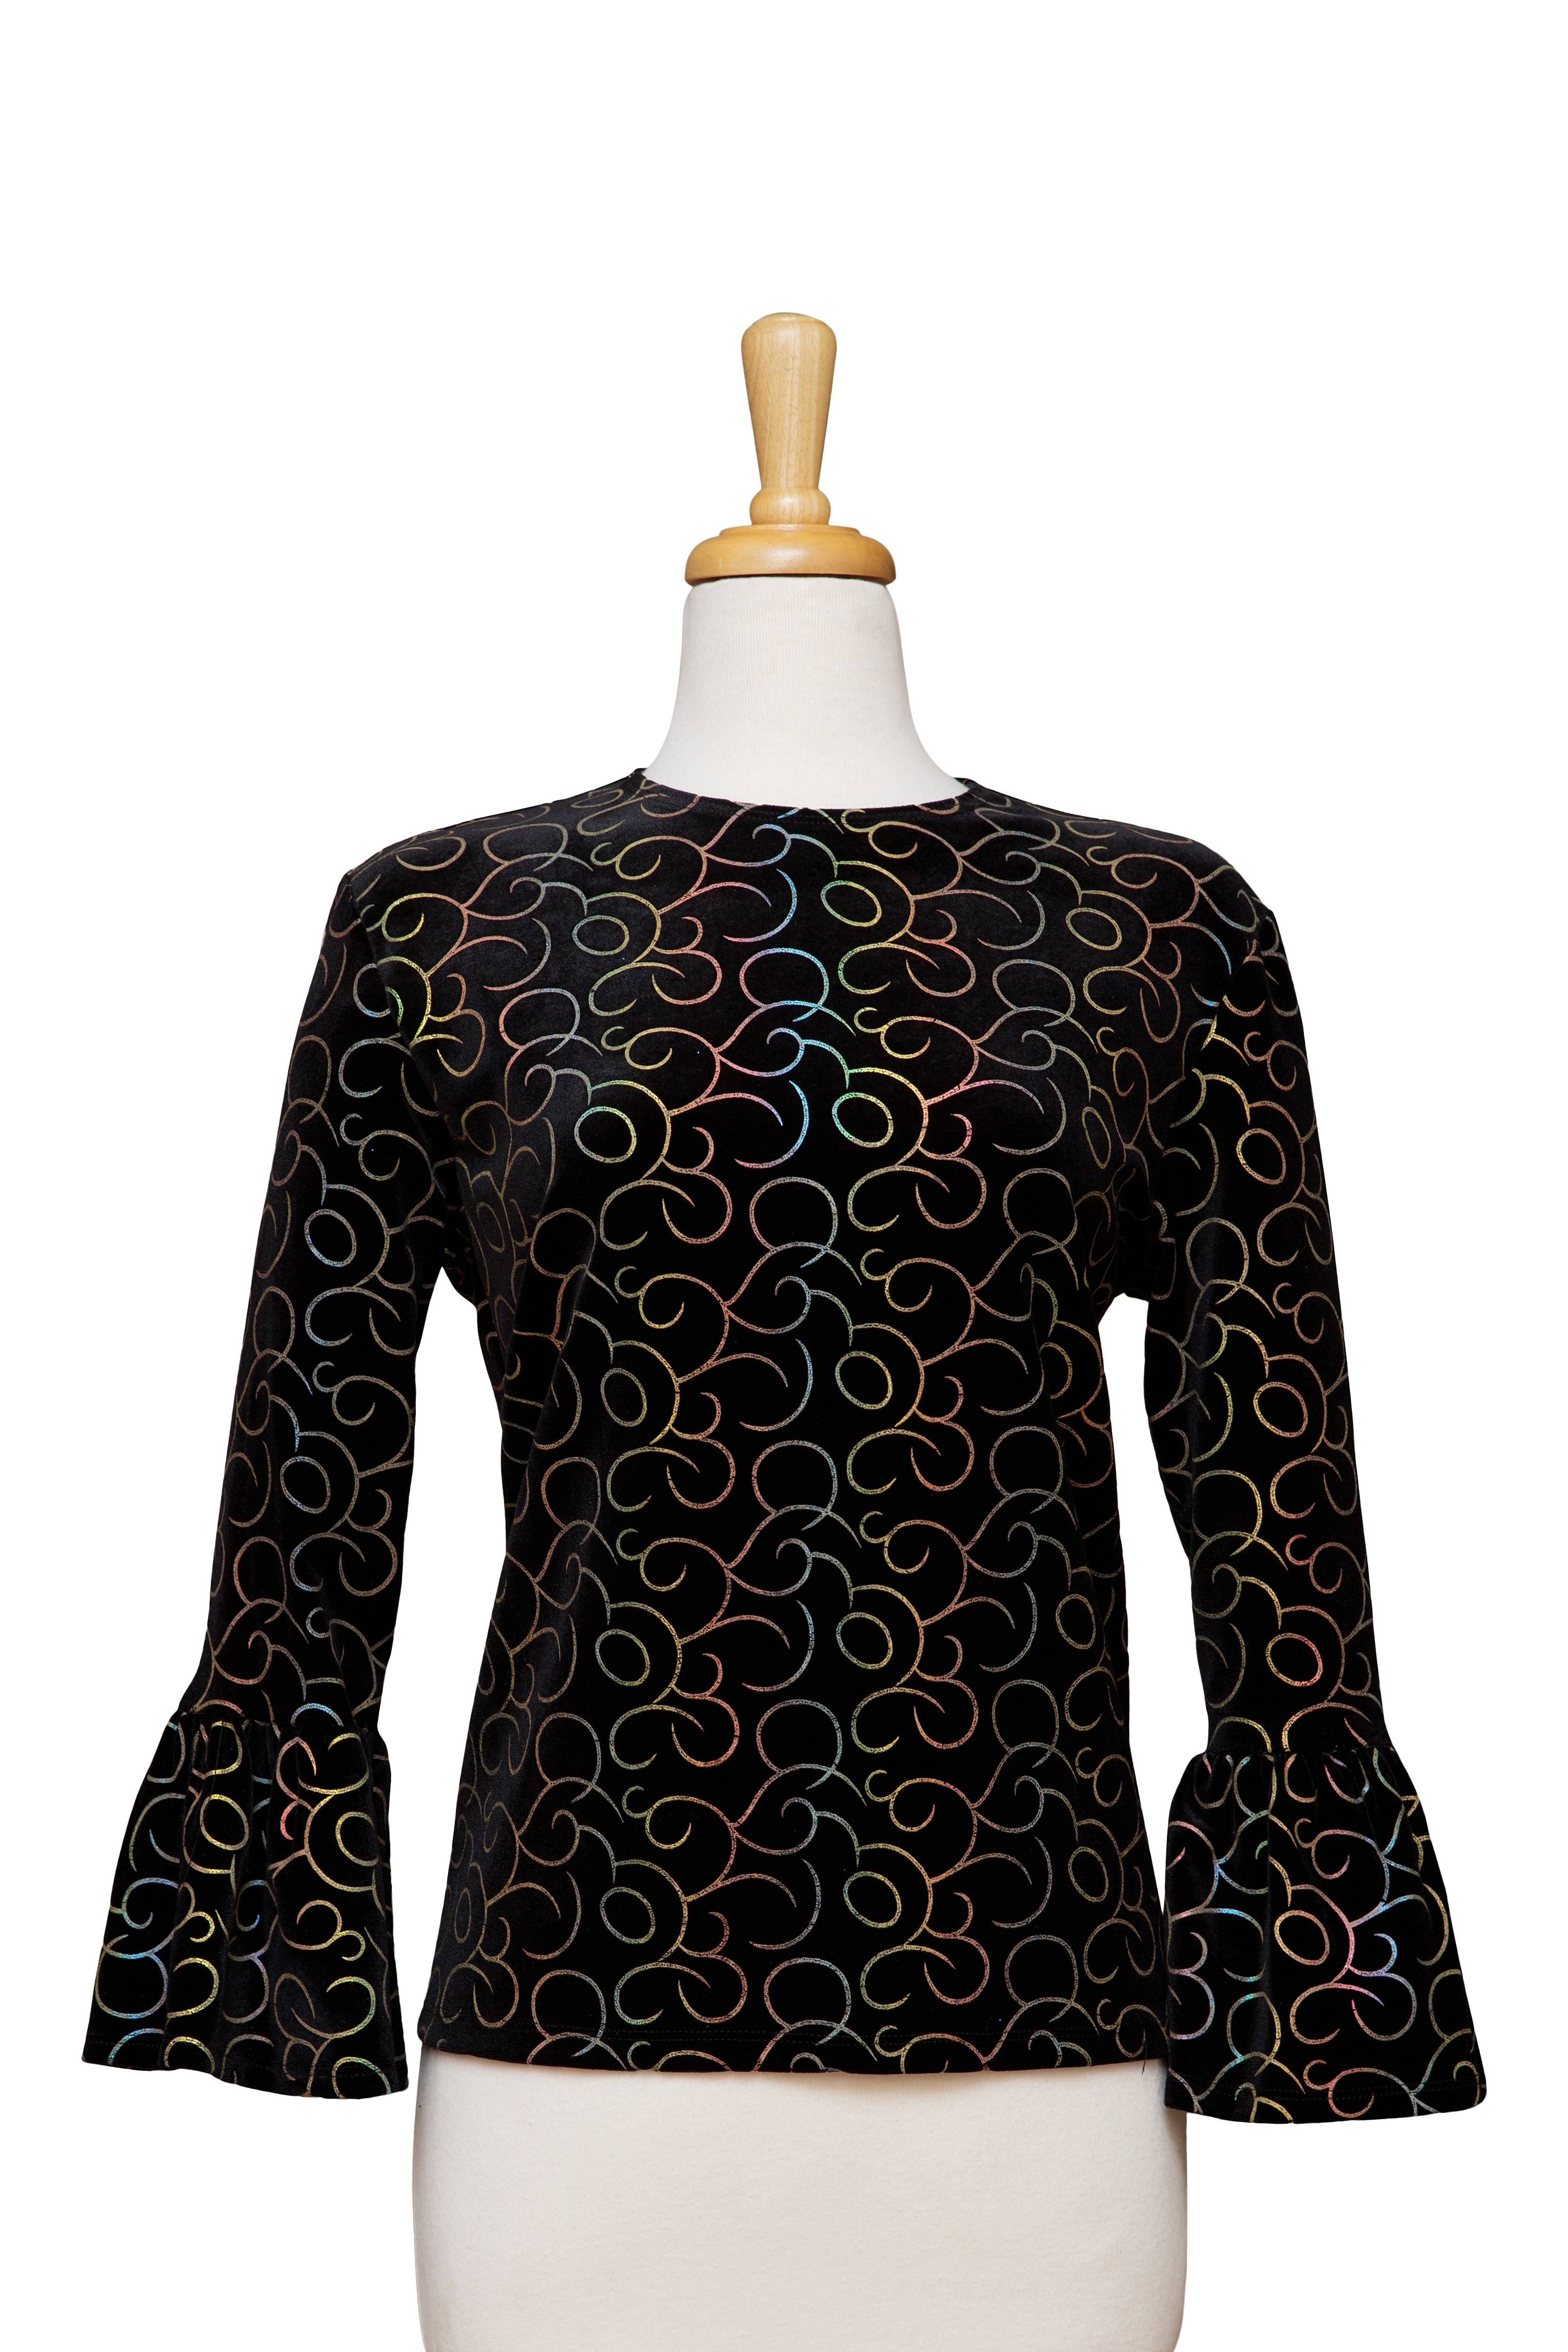 Plus Size Black Velvet With Multi Color Foil Swirls Bell Sleeve Top